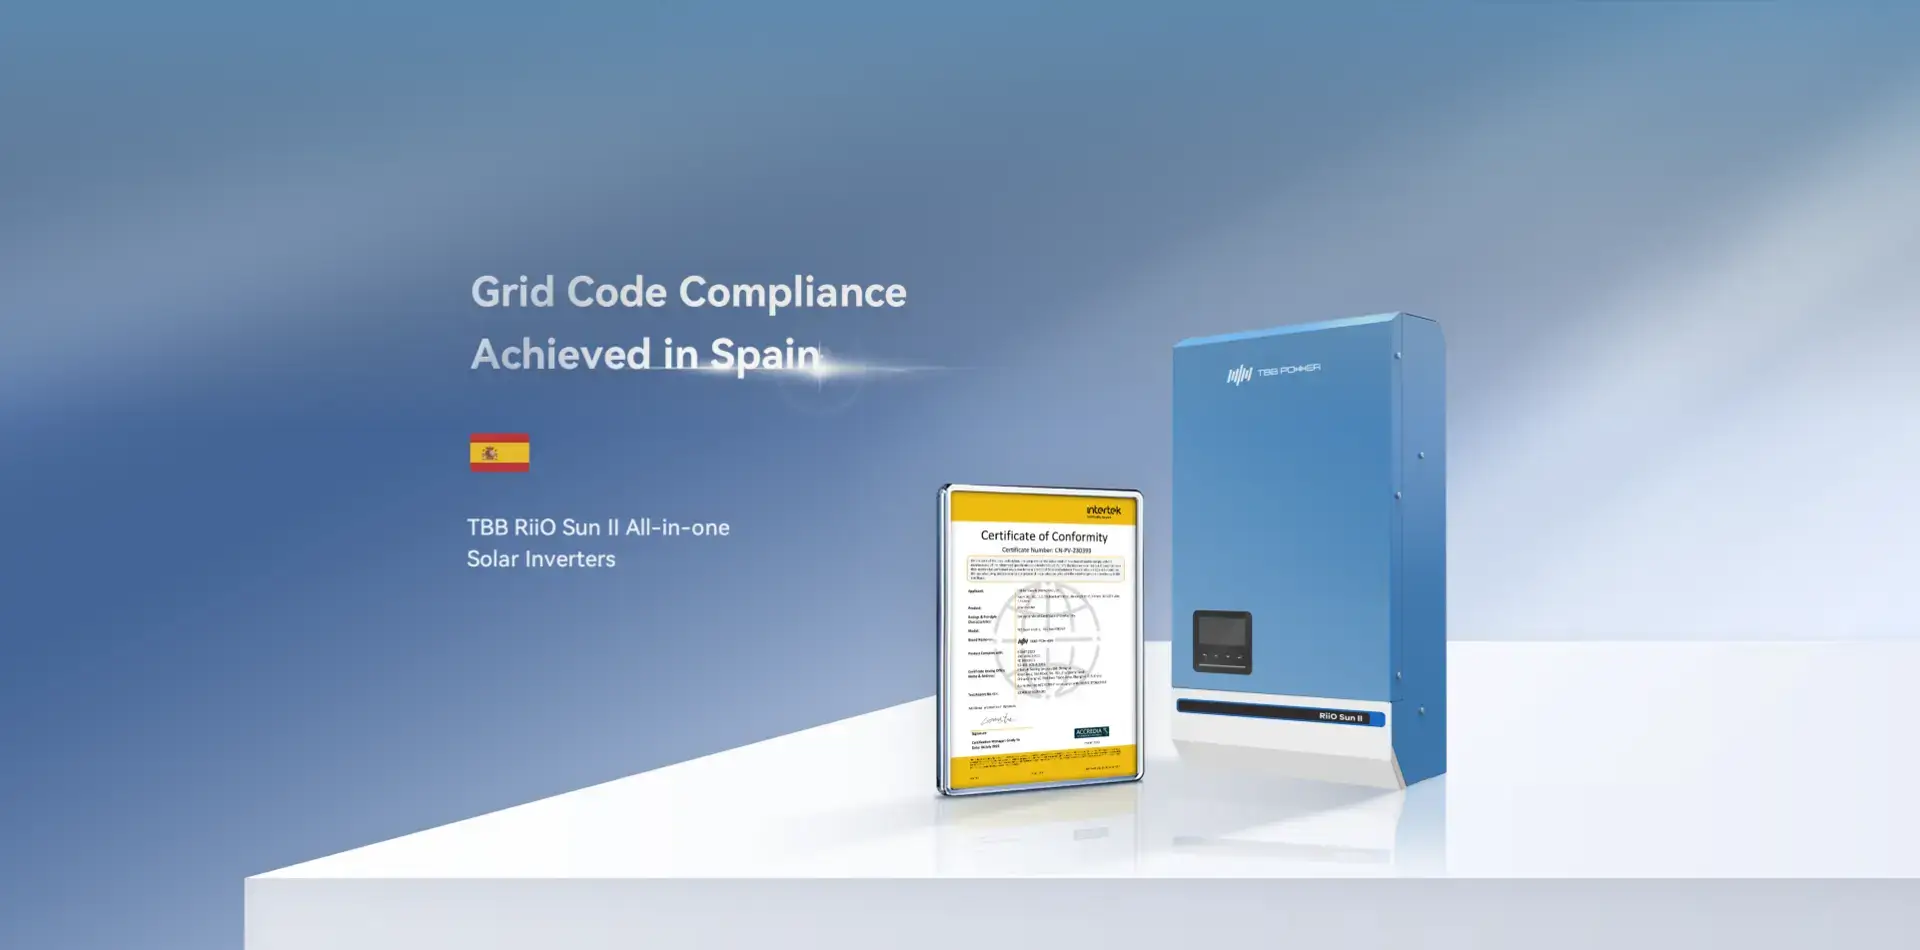 RiiO Sun II solar inverter grid code compliance in Spain